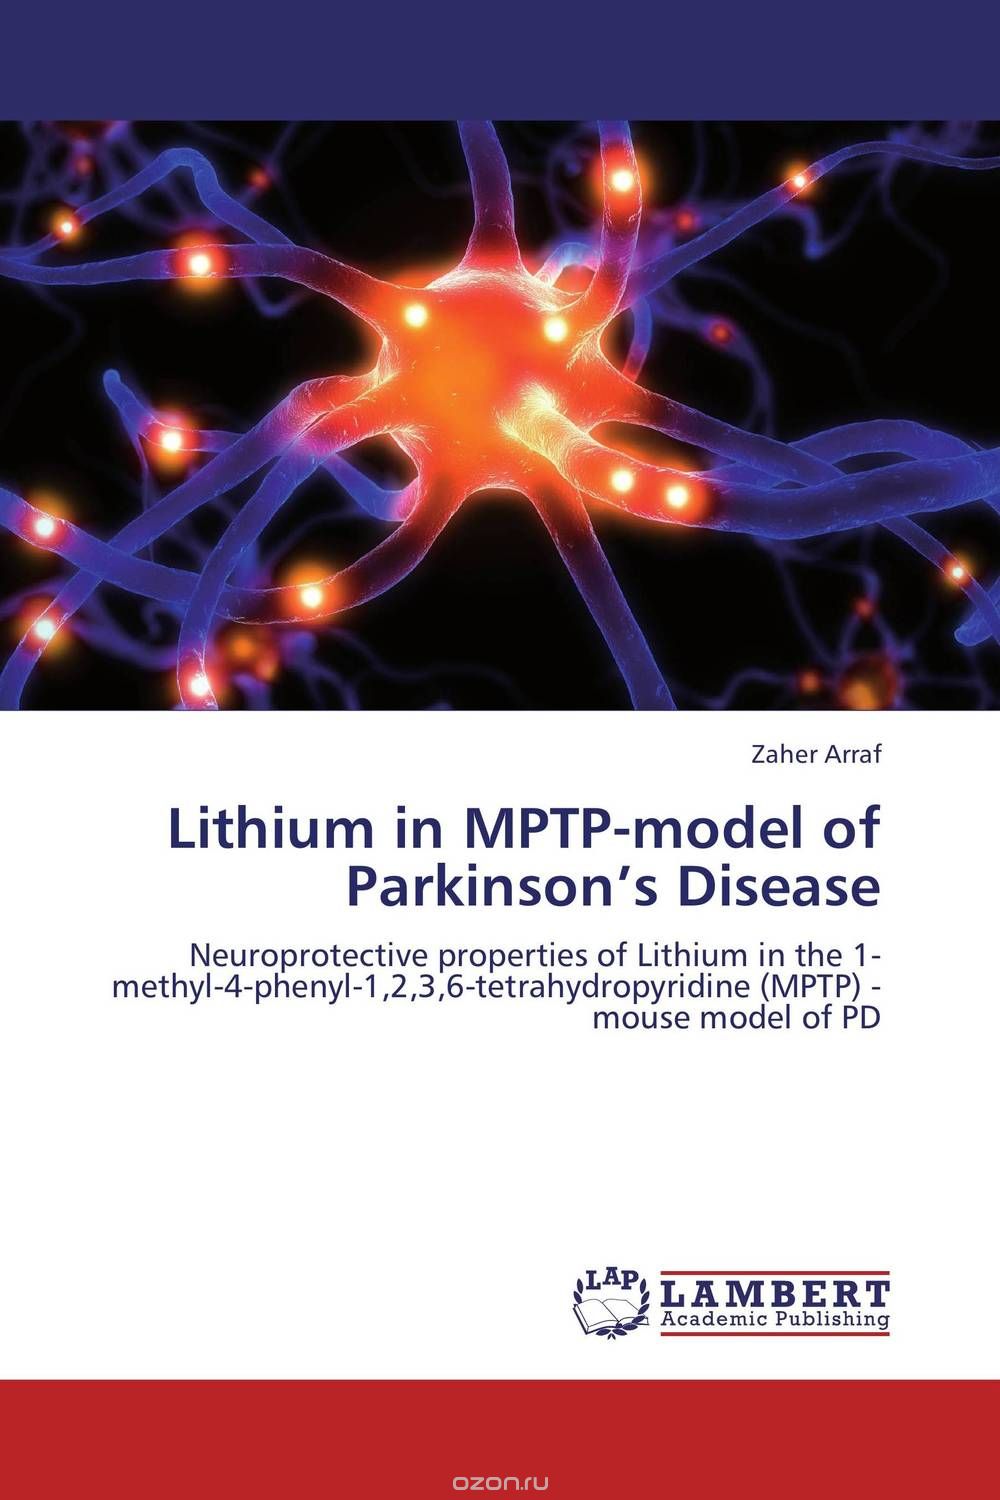 Скачать книгу "Lithium in MPTP-model of Parkinson’s Disease"